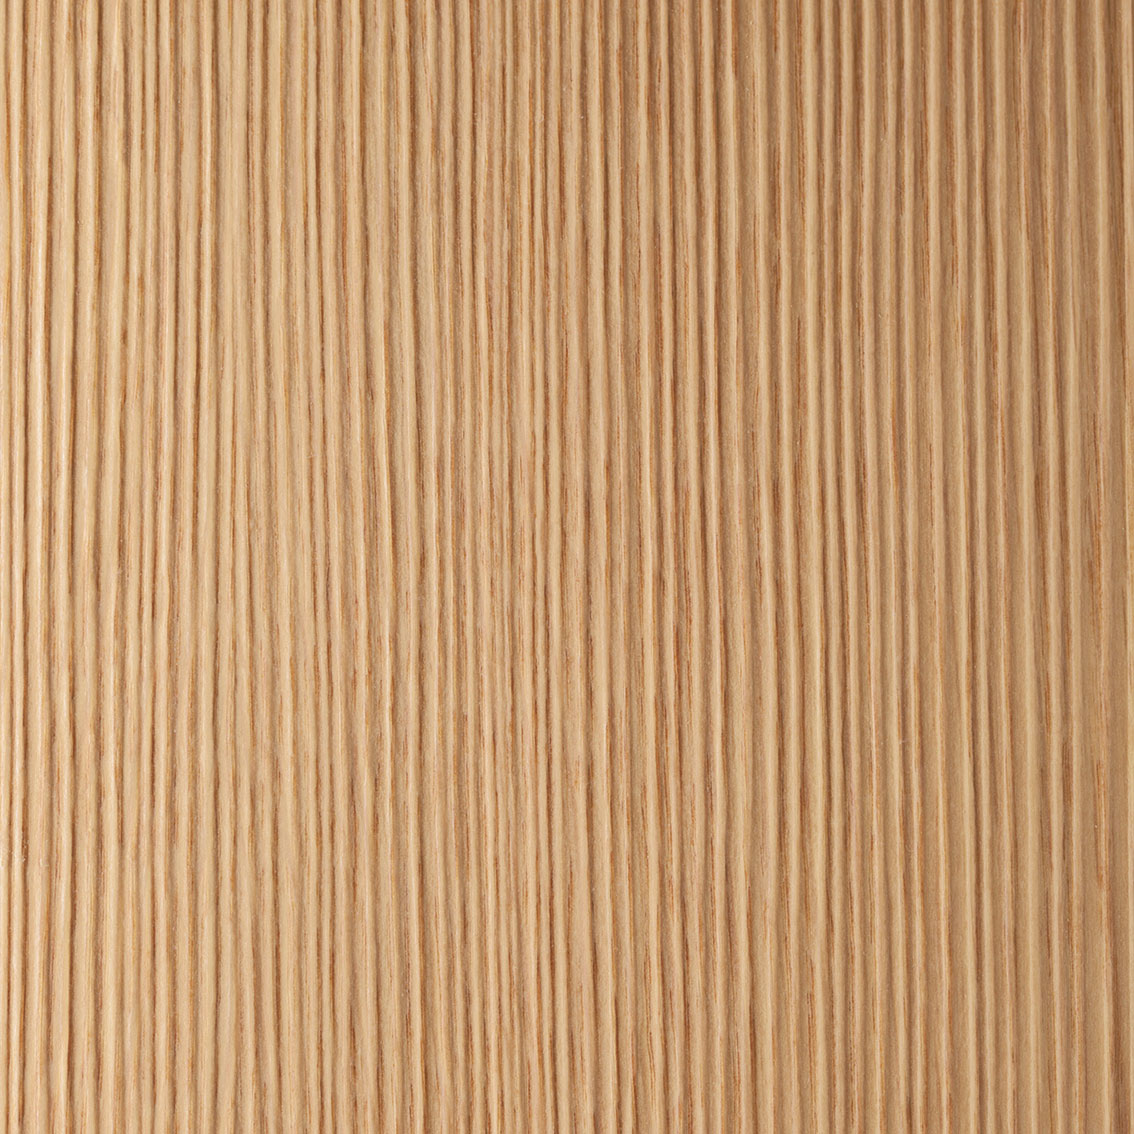 Panel Natural Oak - Sablés d'Oberflex in matte finish